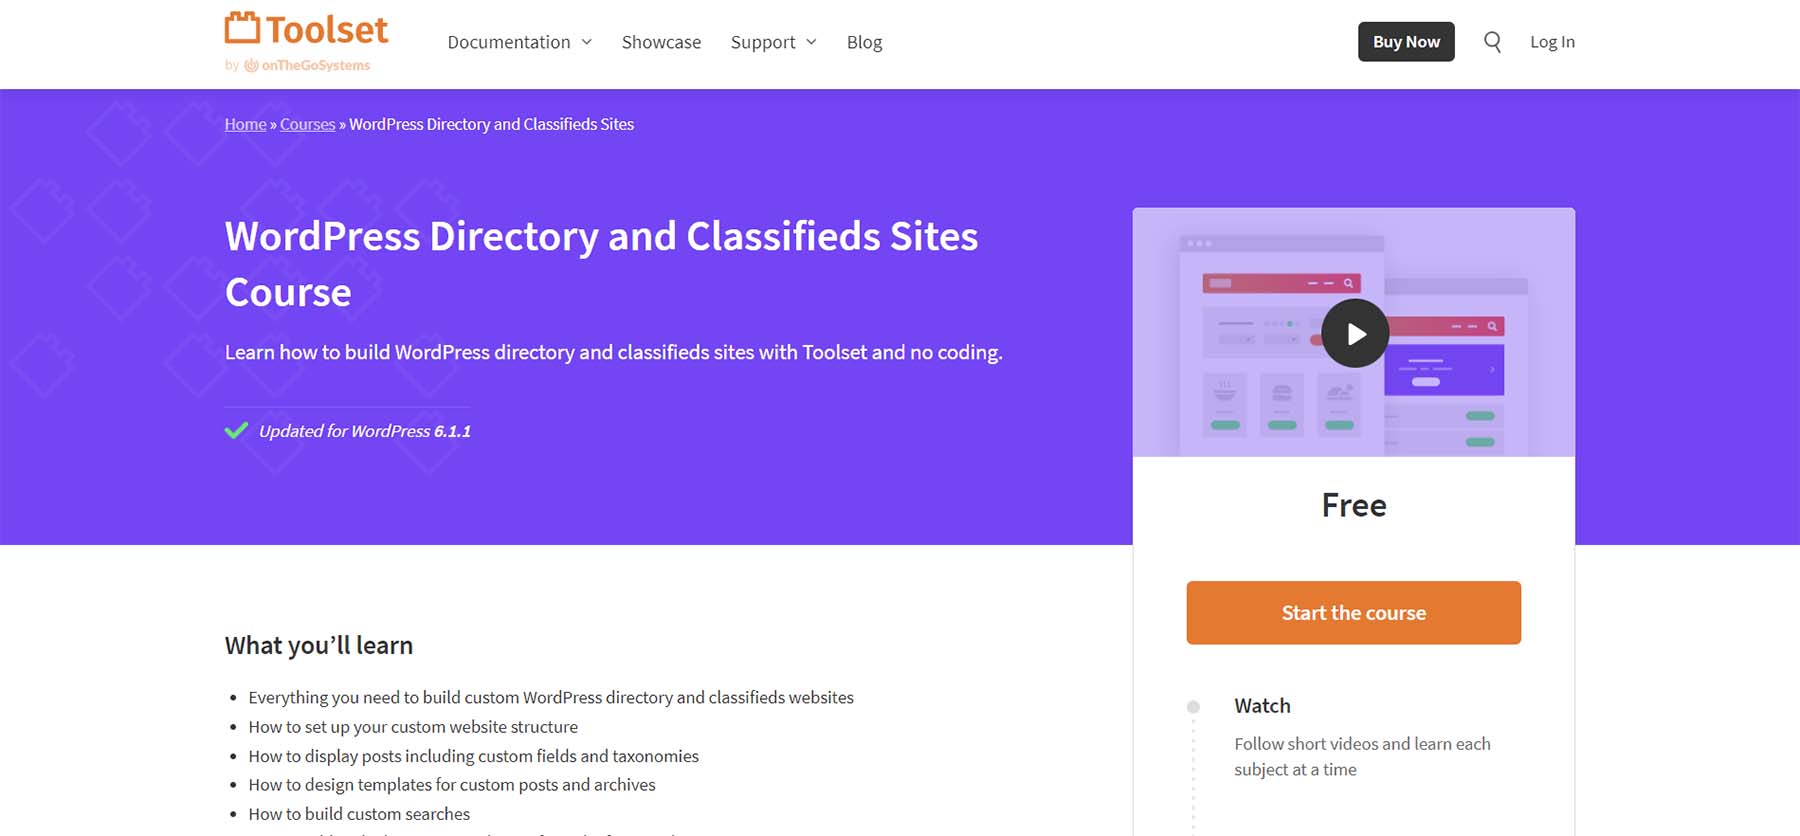 Toolset WordPress Directory course